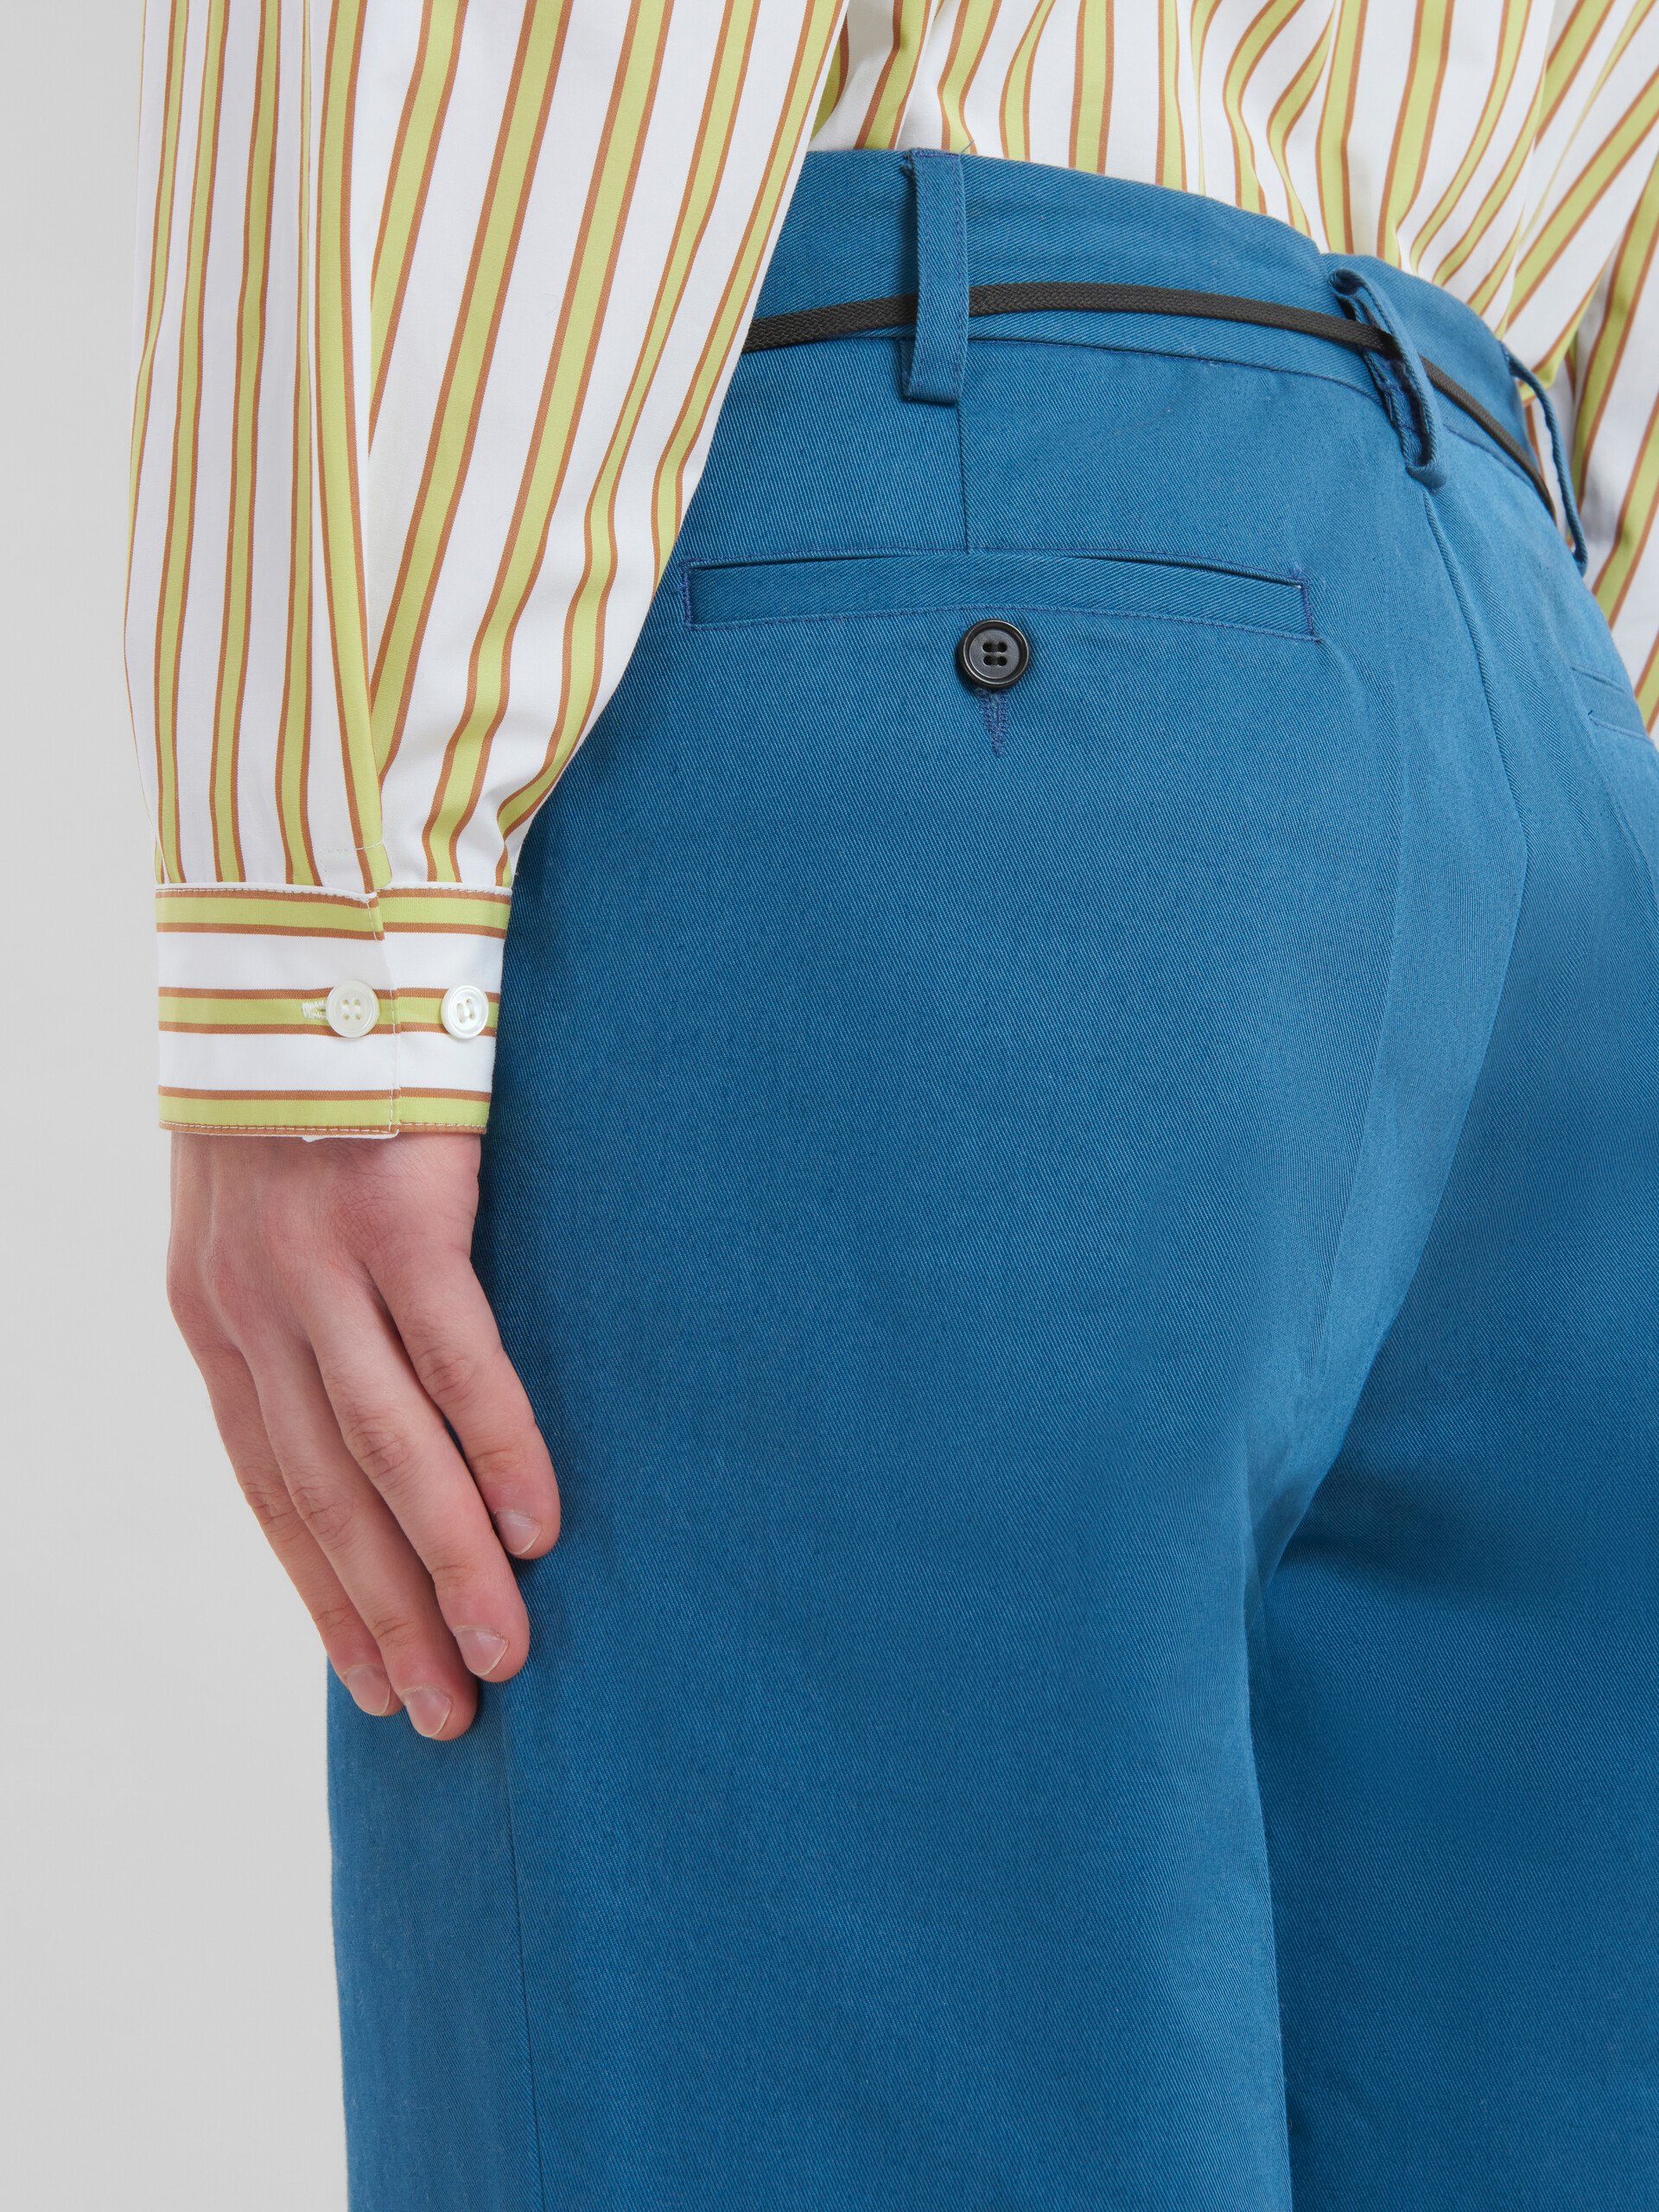 Pantalón chino azul de gabardina ecológica - Pantalones - Image 4